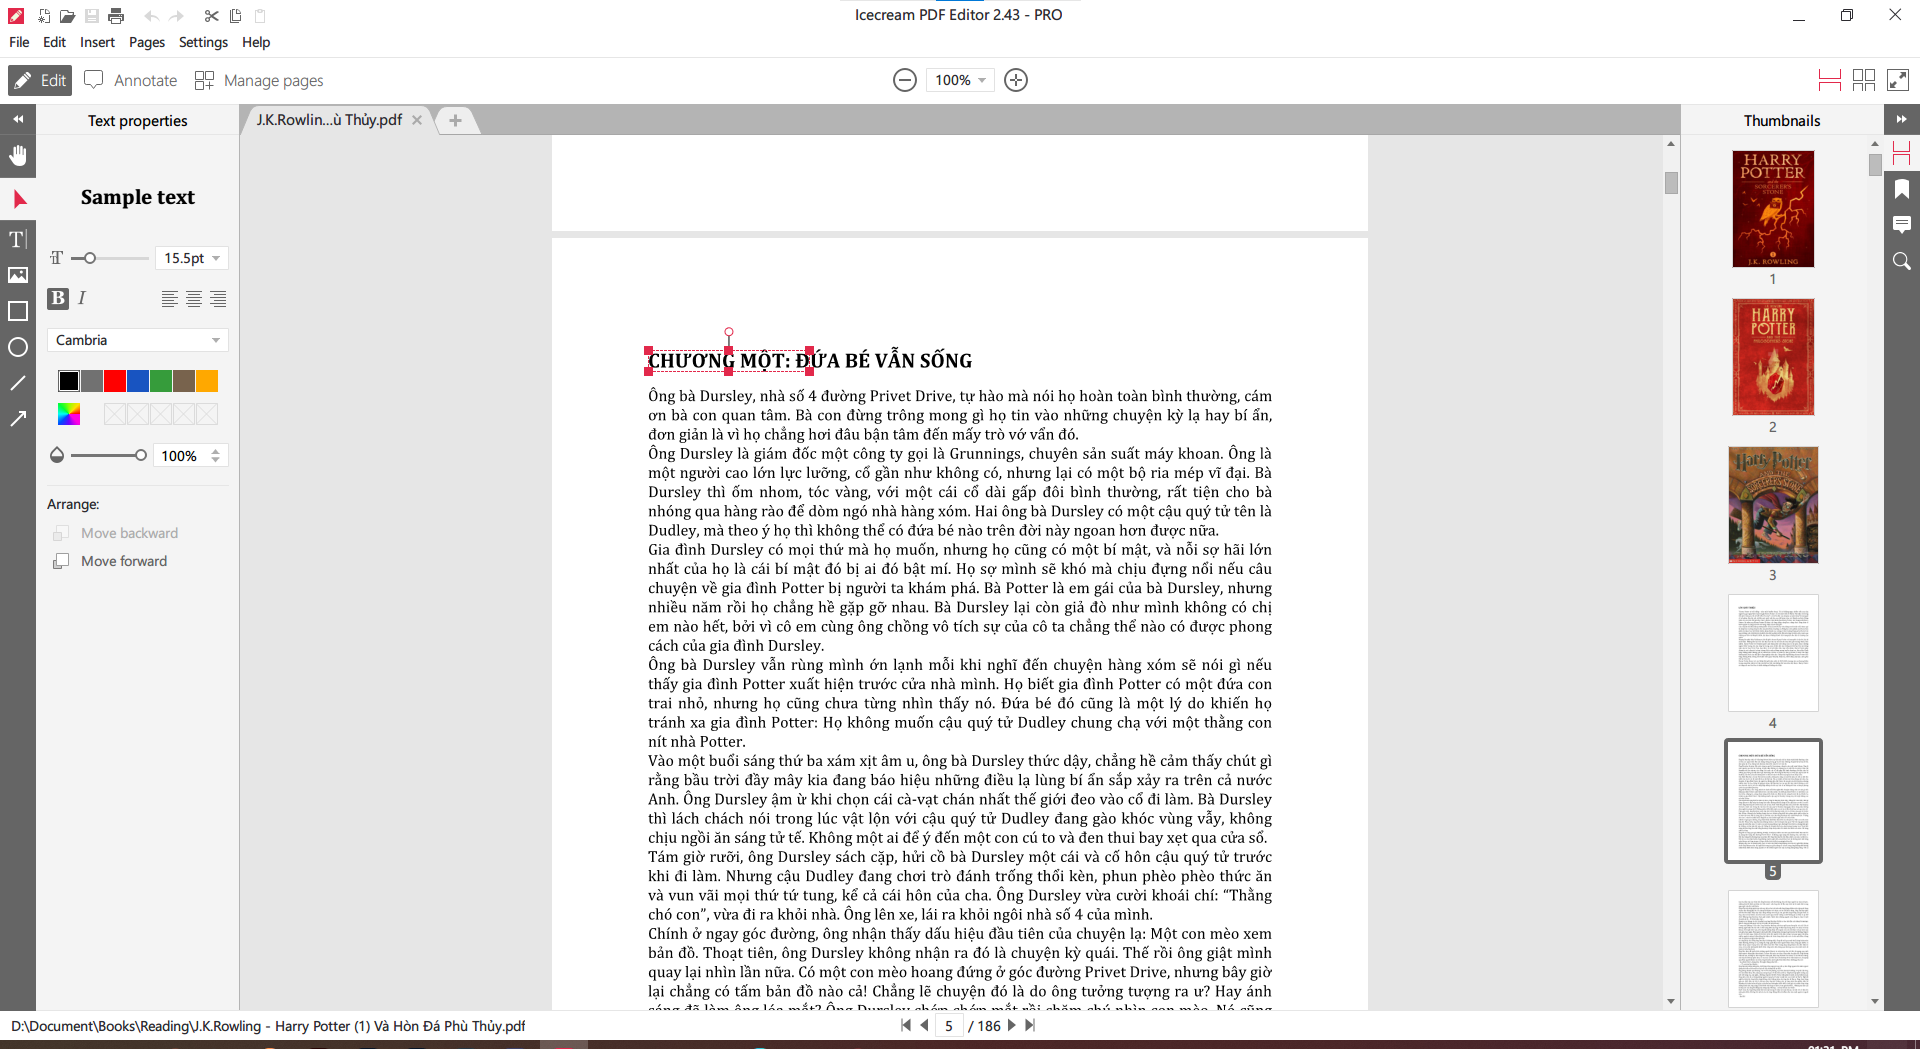 download the new version for mac Icecream PDF Editor Pro 3.16